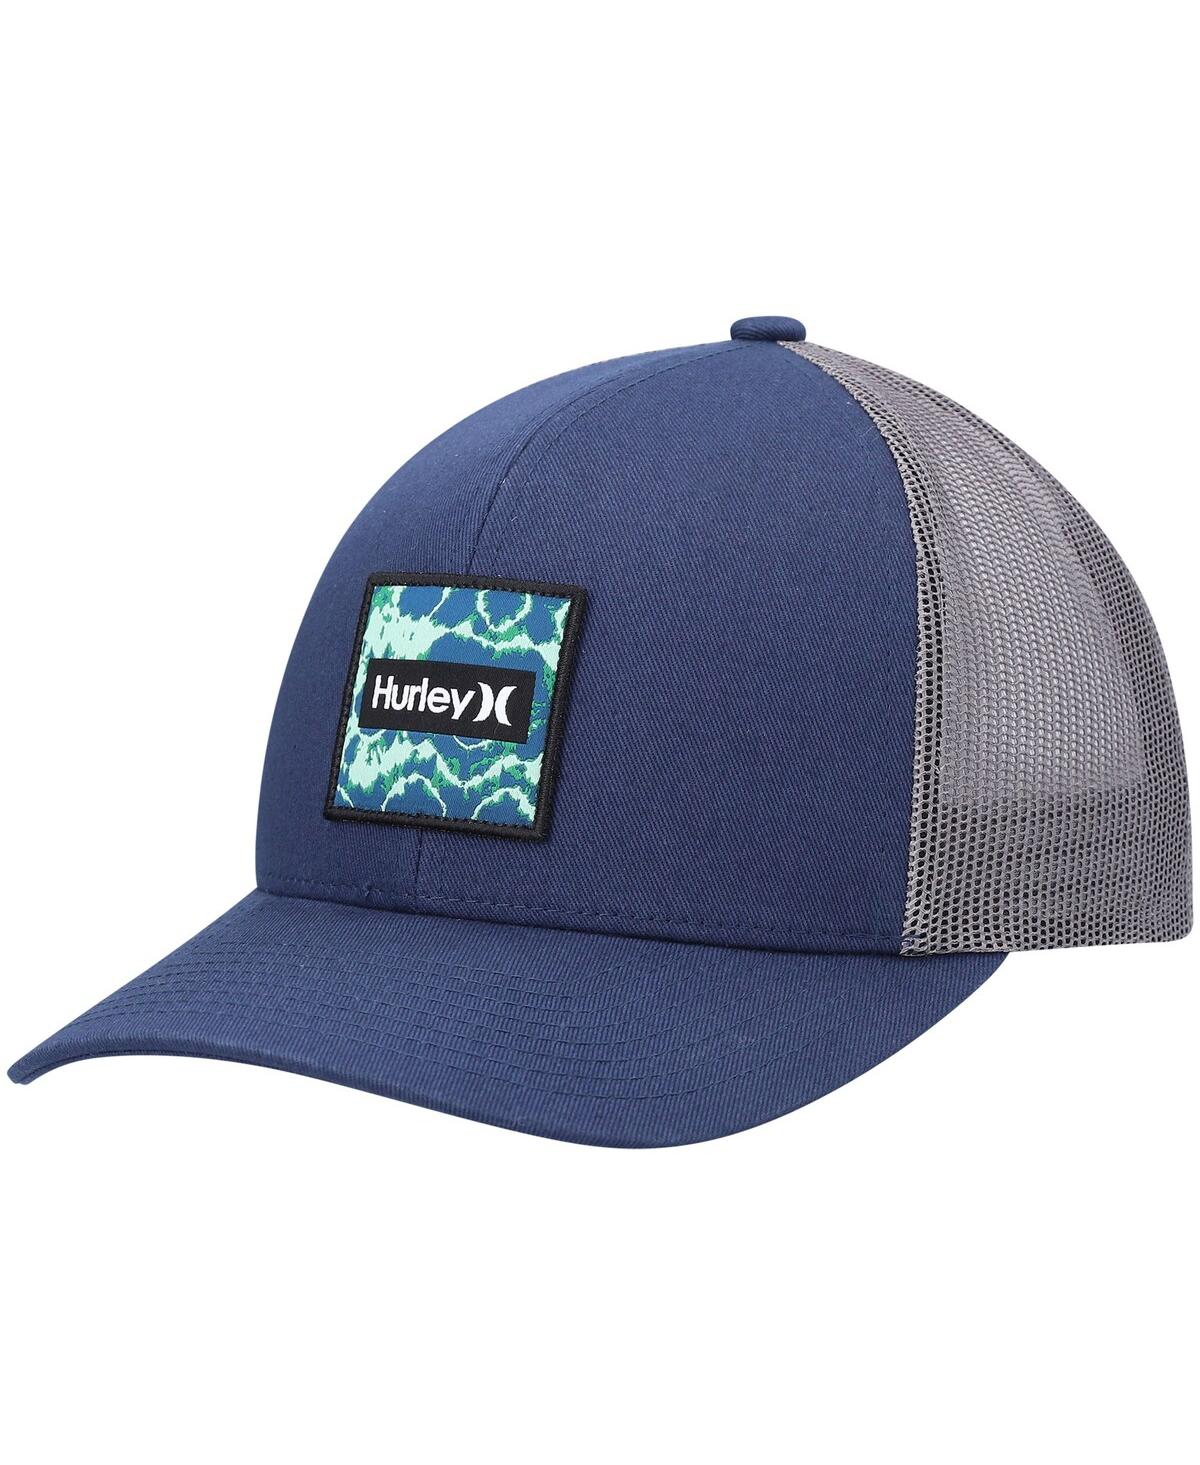 Men's Hurley Navy Seacliff Trucker Snapback Hat - Navy